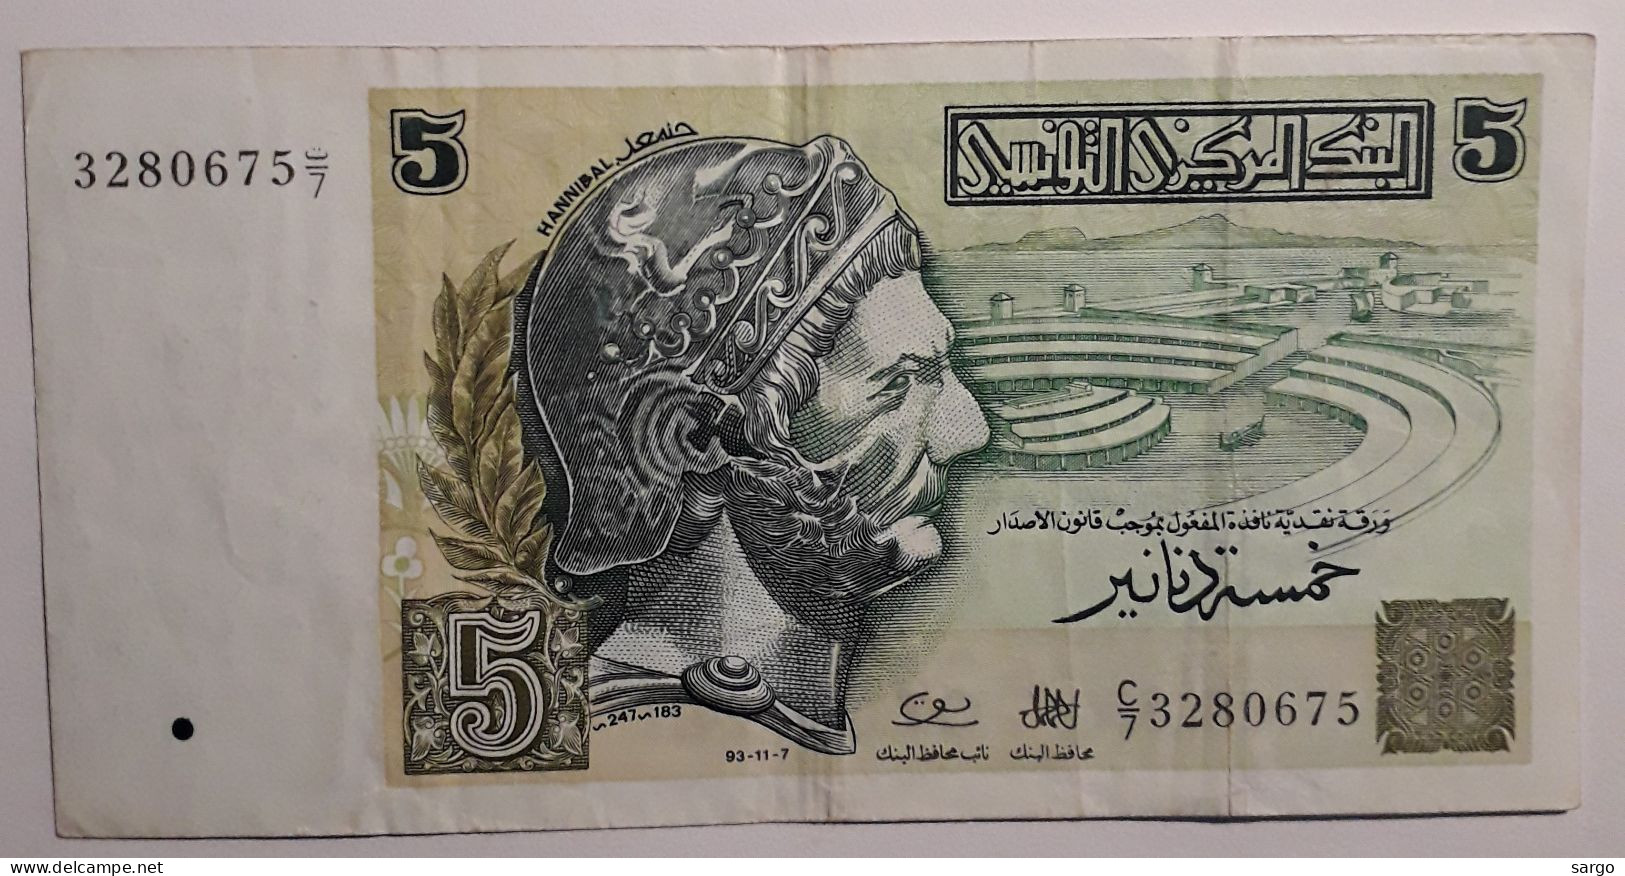 TUNISIA - 5 DINARS - 1993 - CIRC - P 86 - BANKNOTES - PAPER MONEY - CARTAMONETA - - Tunisia